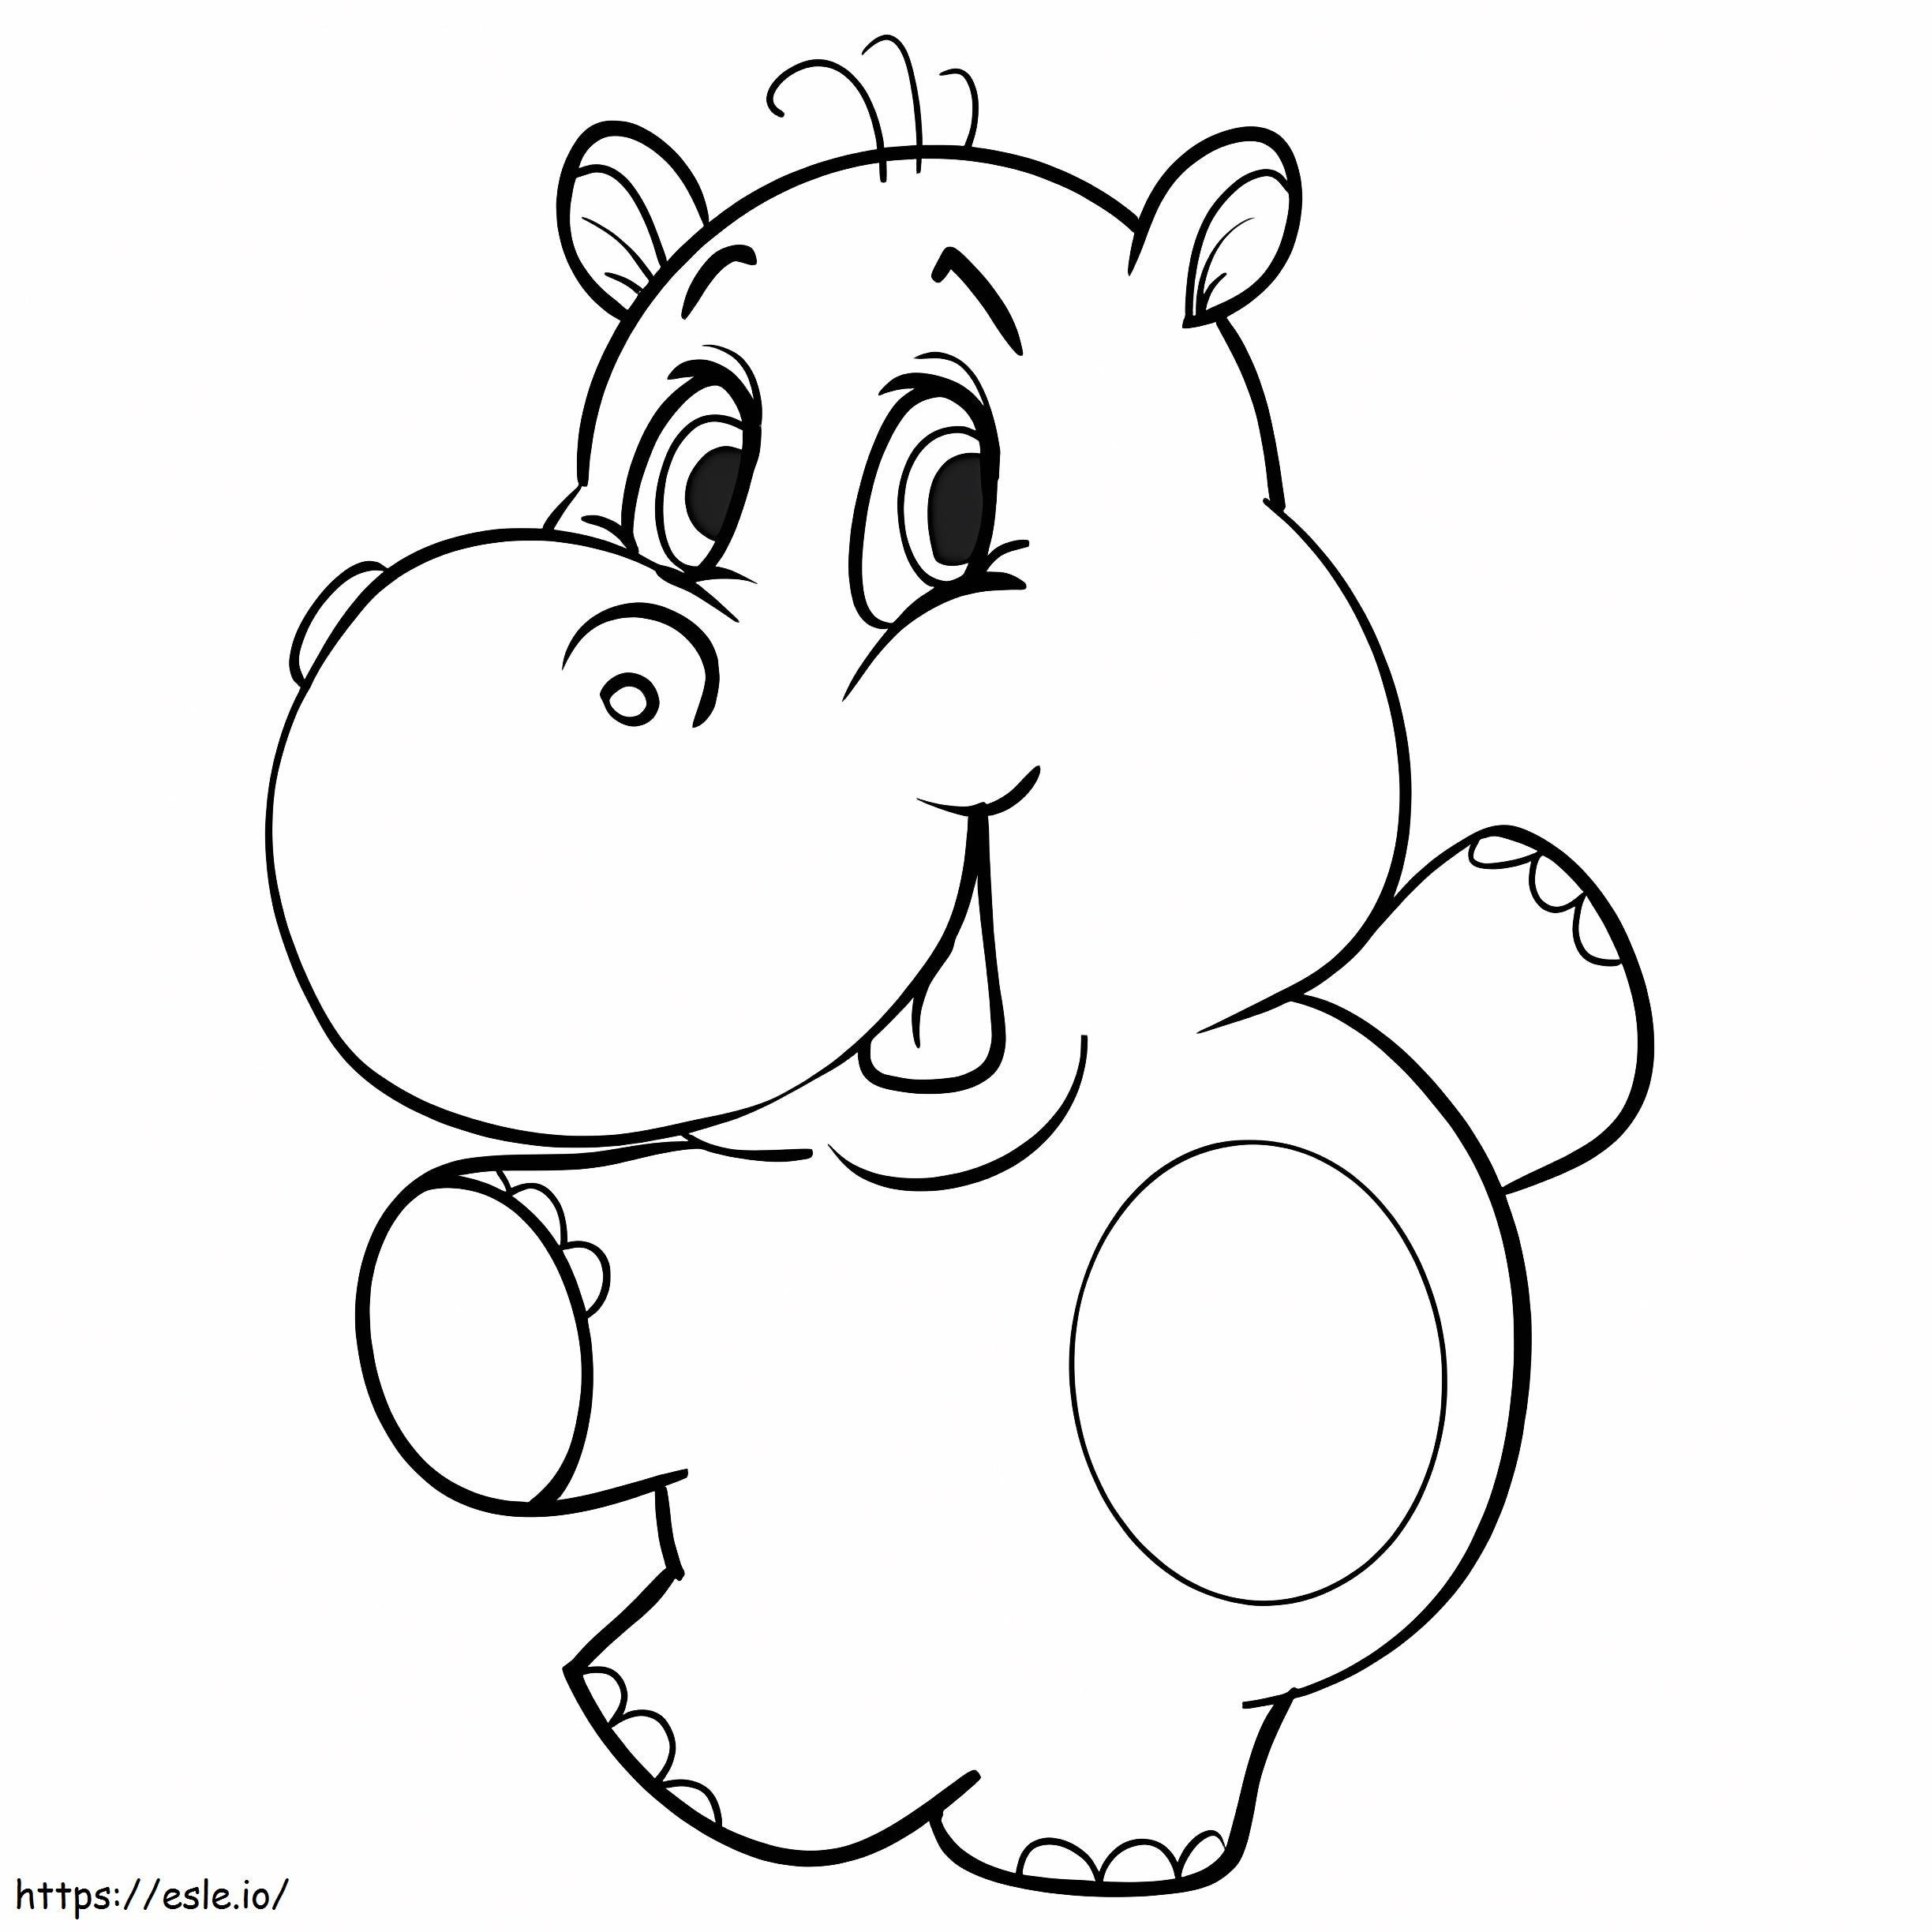 Coloriage Dessin animé bébé hippopotame à imprimer dessin